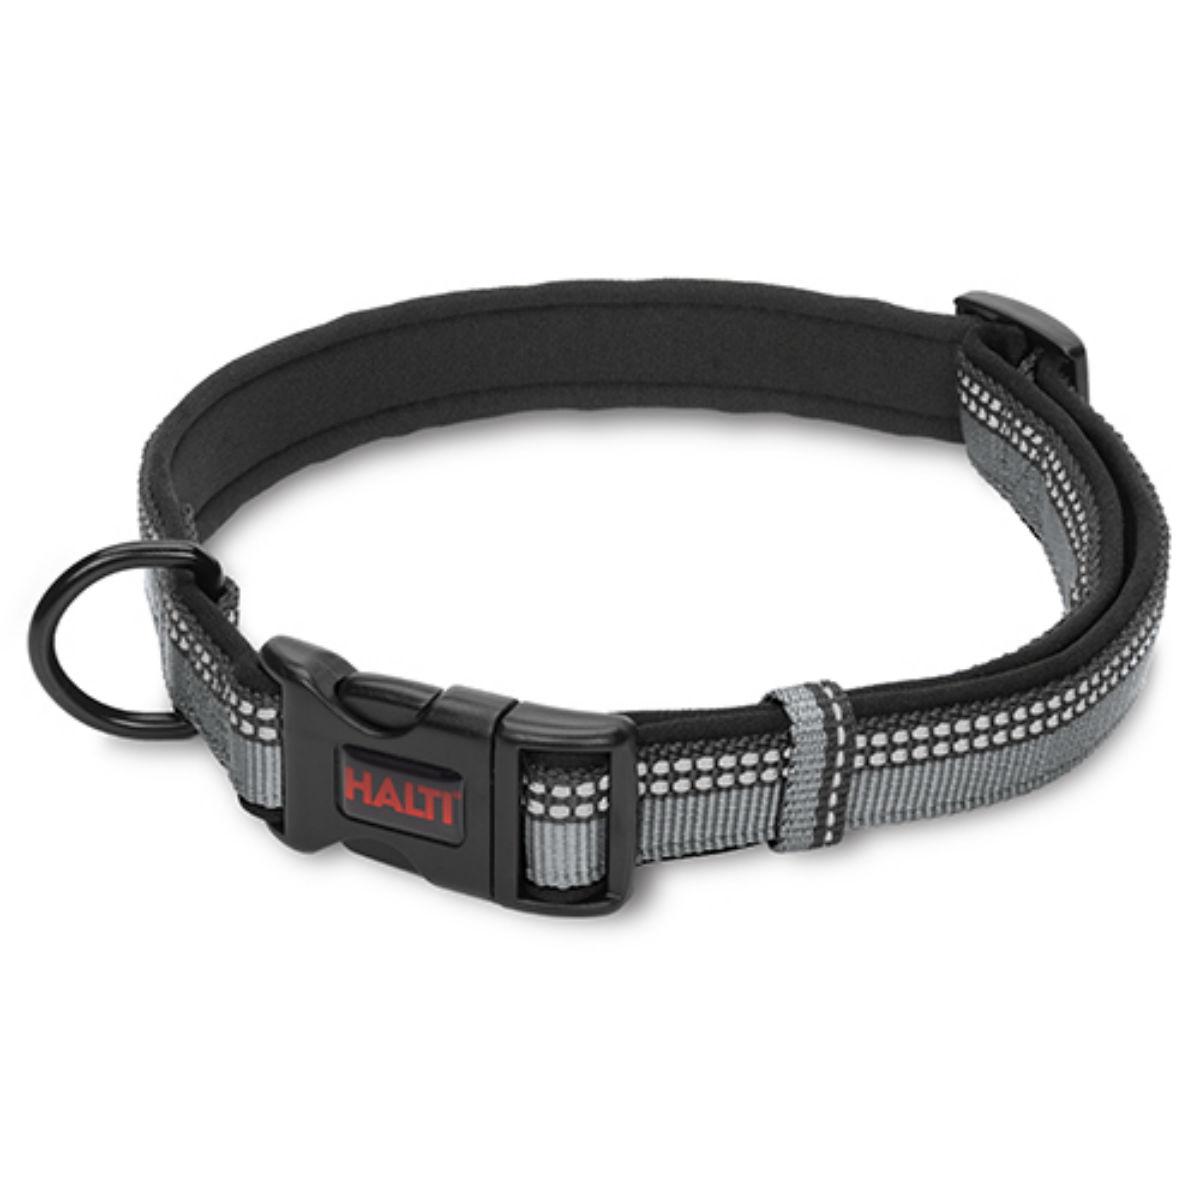 Halti Two-Toned Dog Collar - Black and Gray